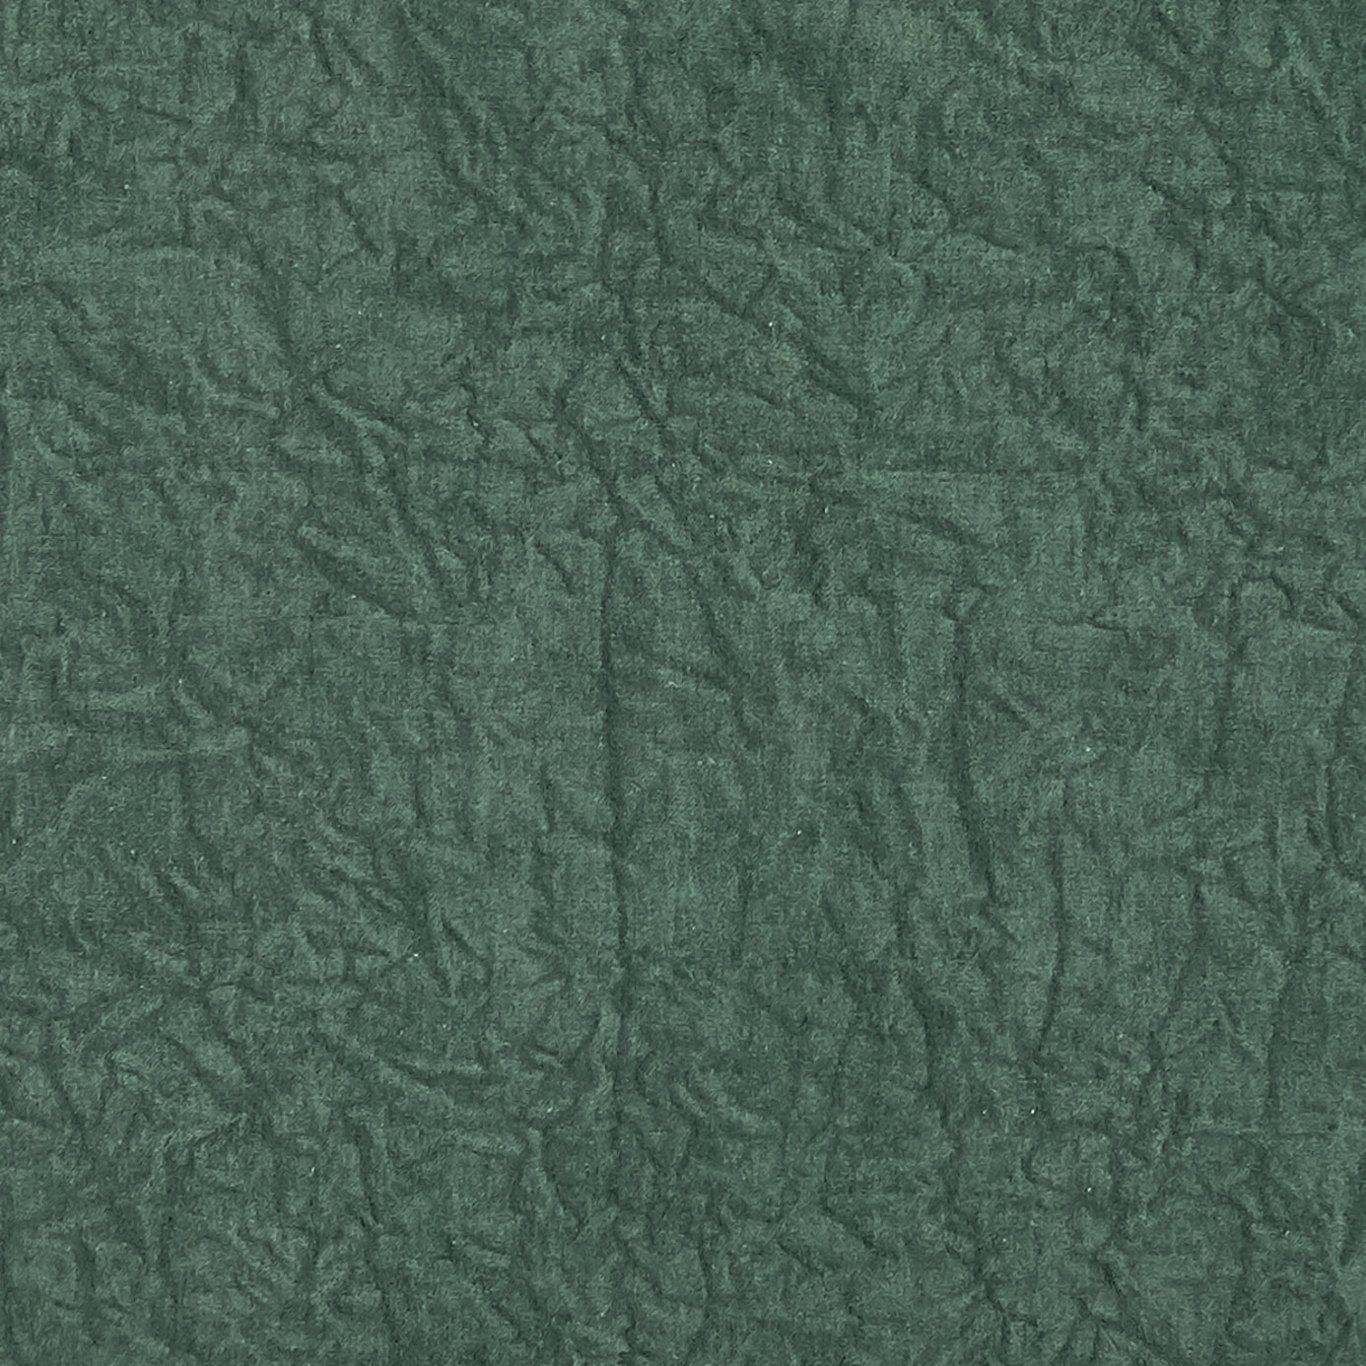 Abelia Fabric by Clarke & Clarke - F1434/04 - Emerald